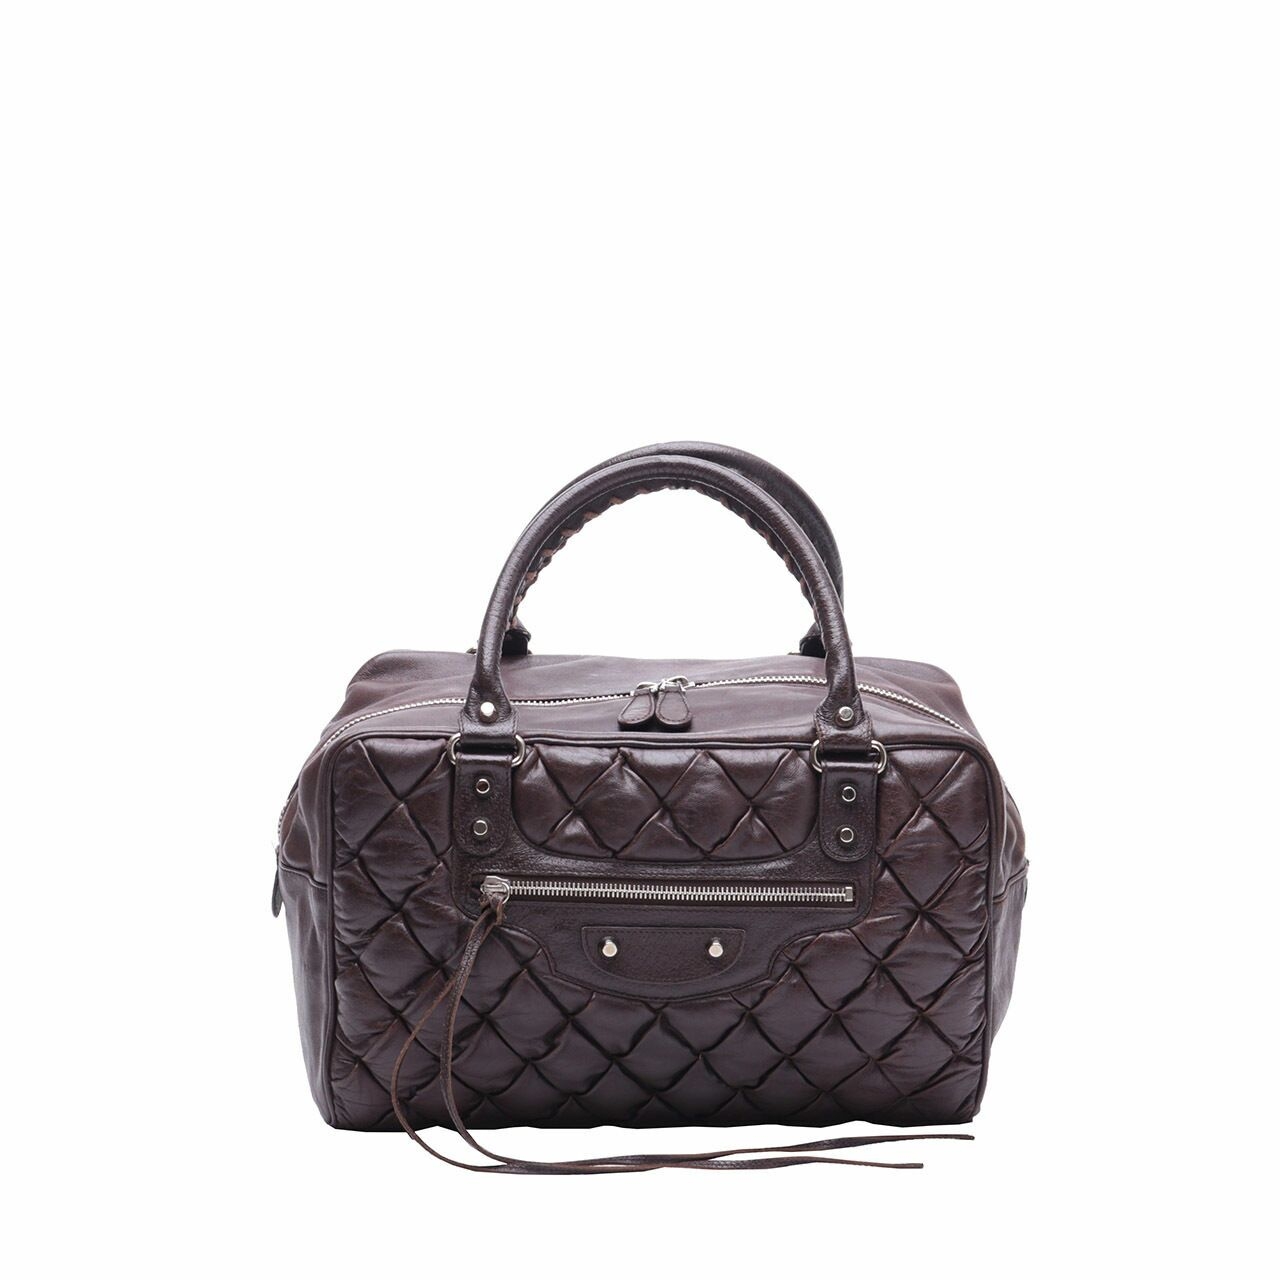 Balenciaga Matelasse Dark Brown Quilted Leather Shoulder Bag 